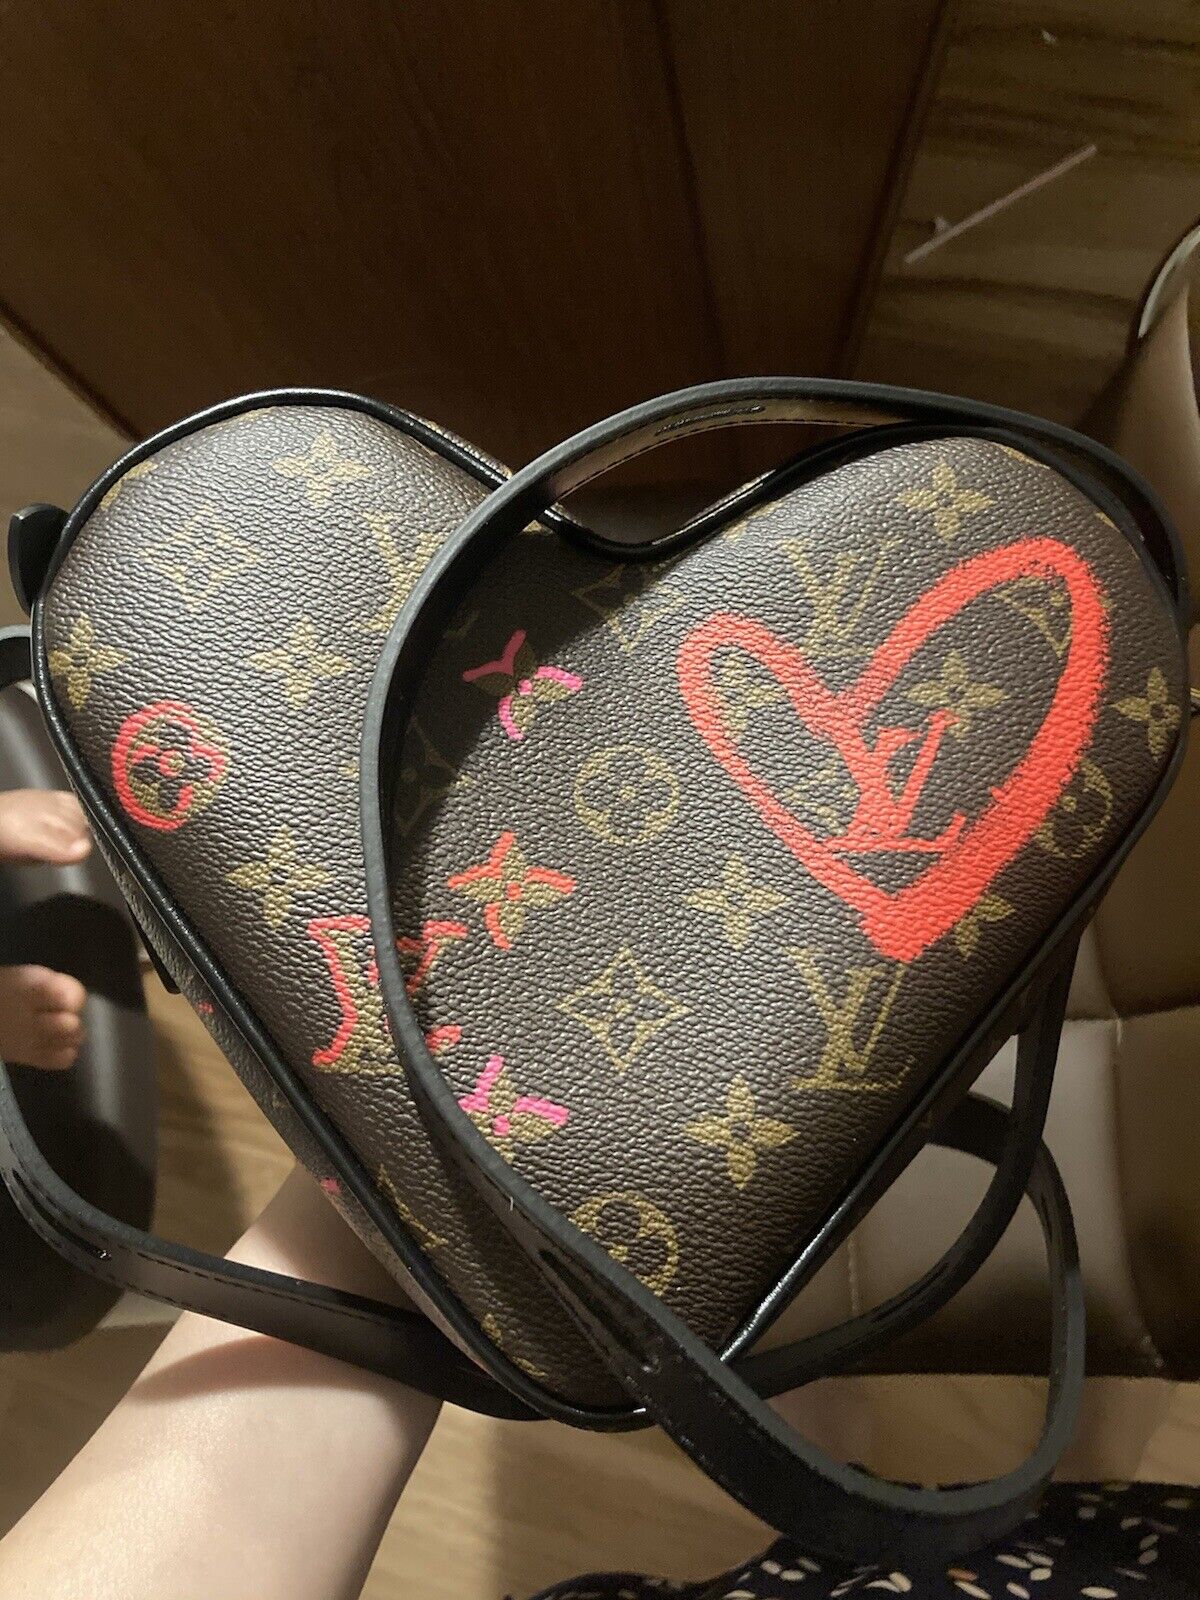 louis vuitton heart shaped purse